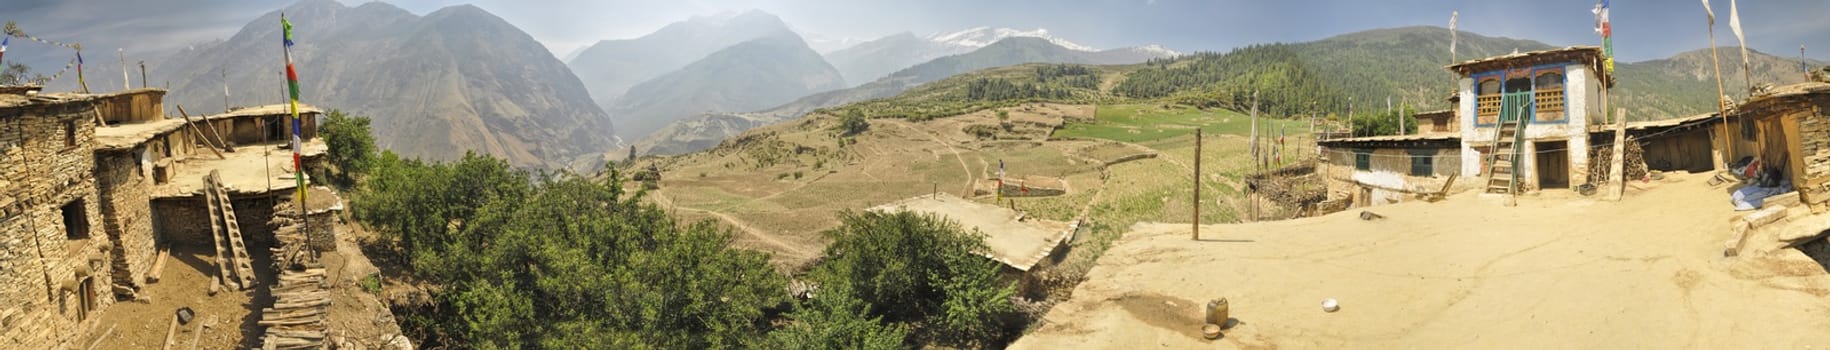 Scenic panorama from buddhist monastery in Dolpo region in Nepal